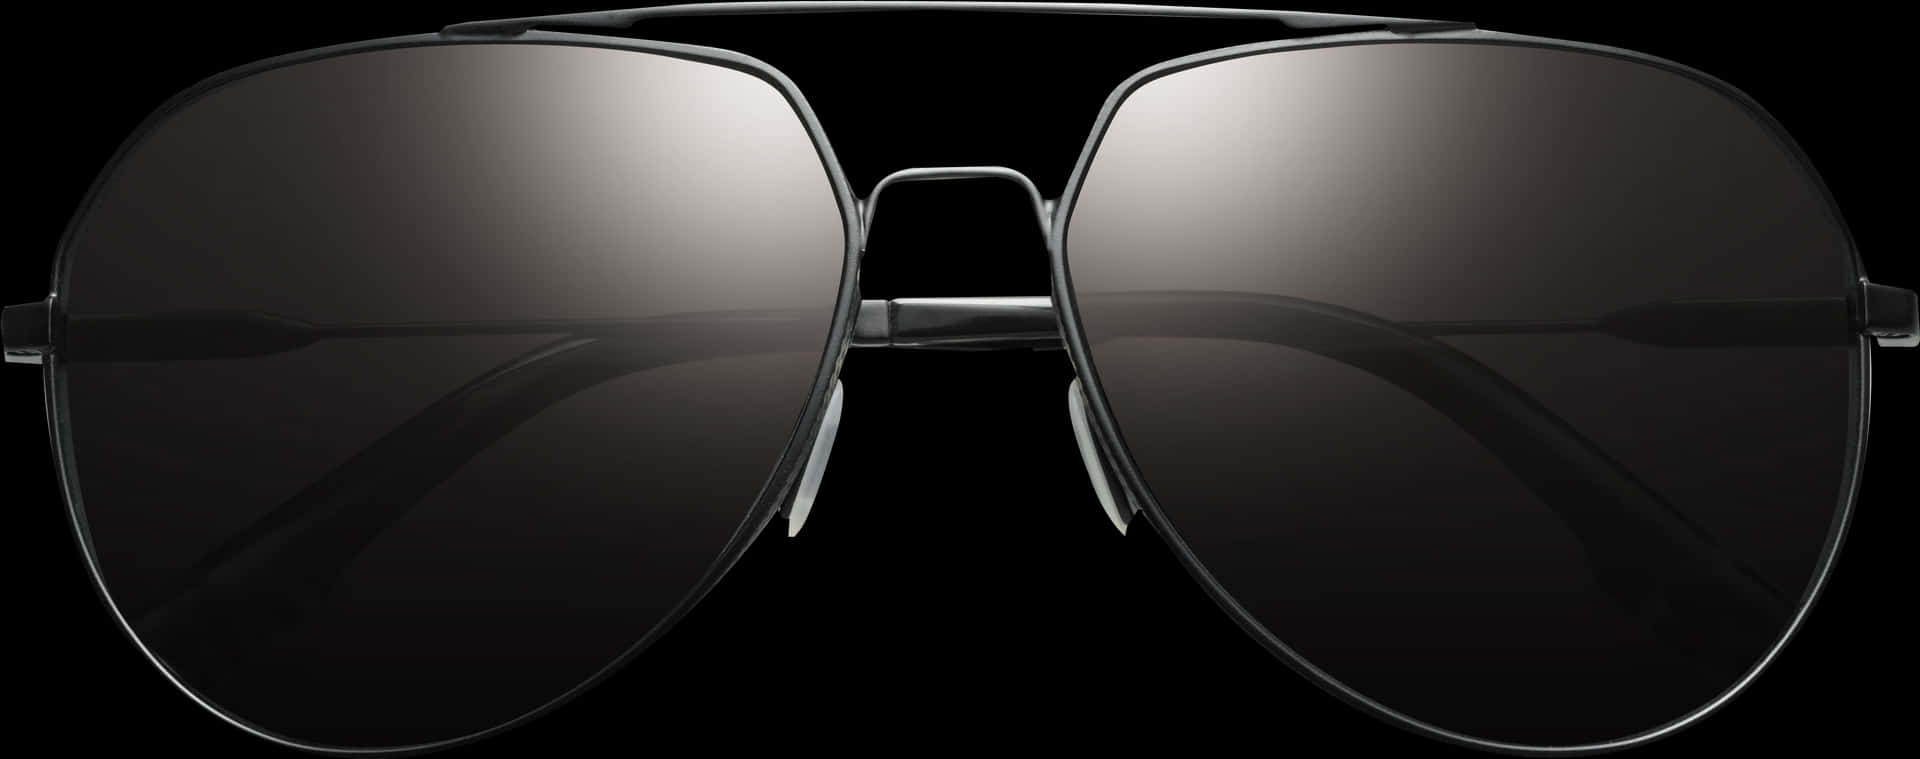 Classic Aviator Sunglasses Black PNG